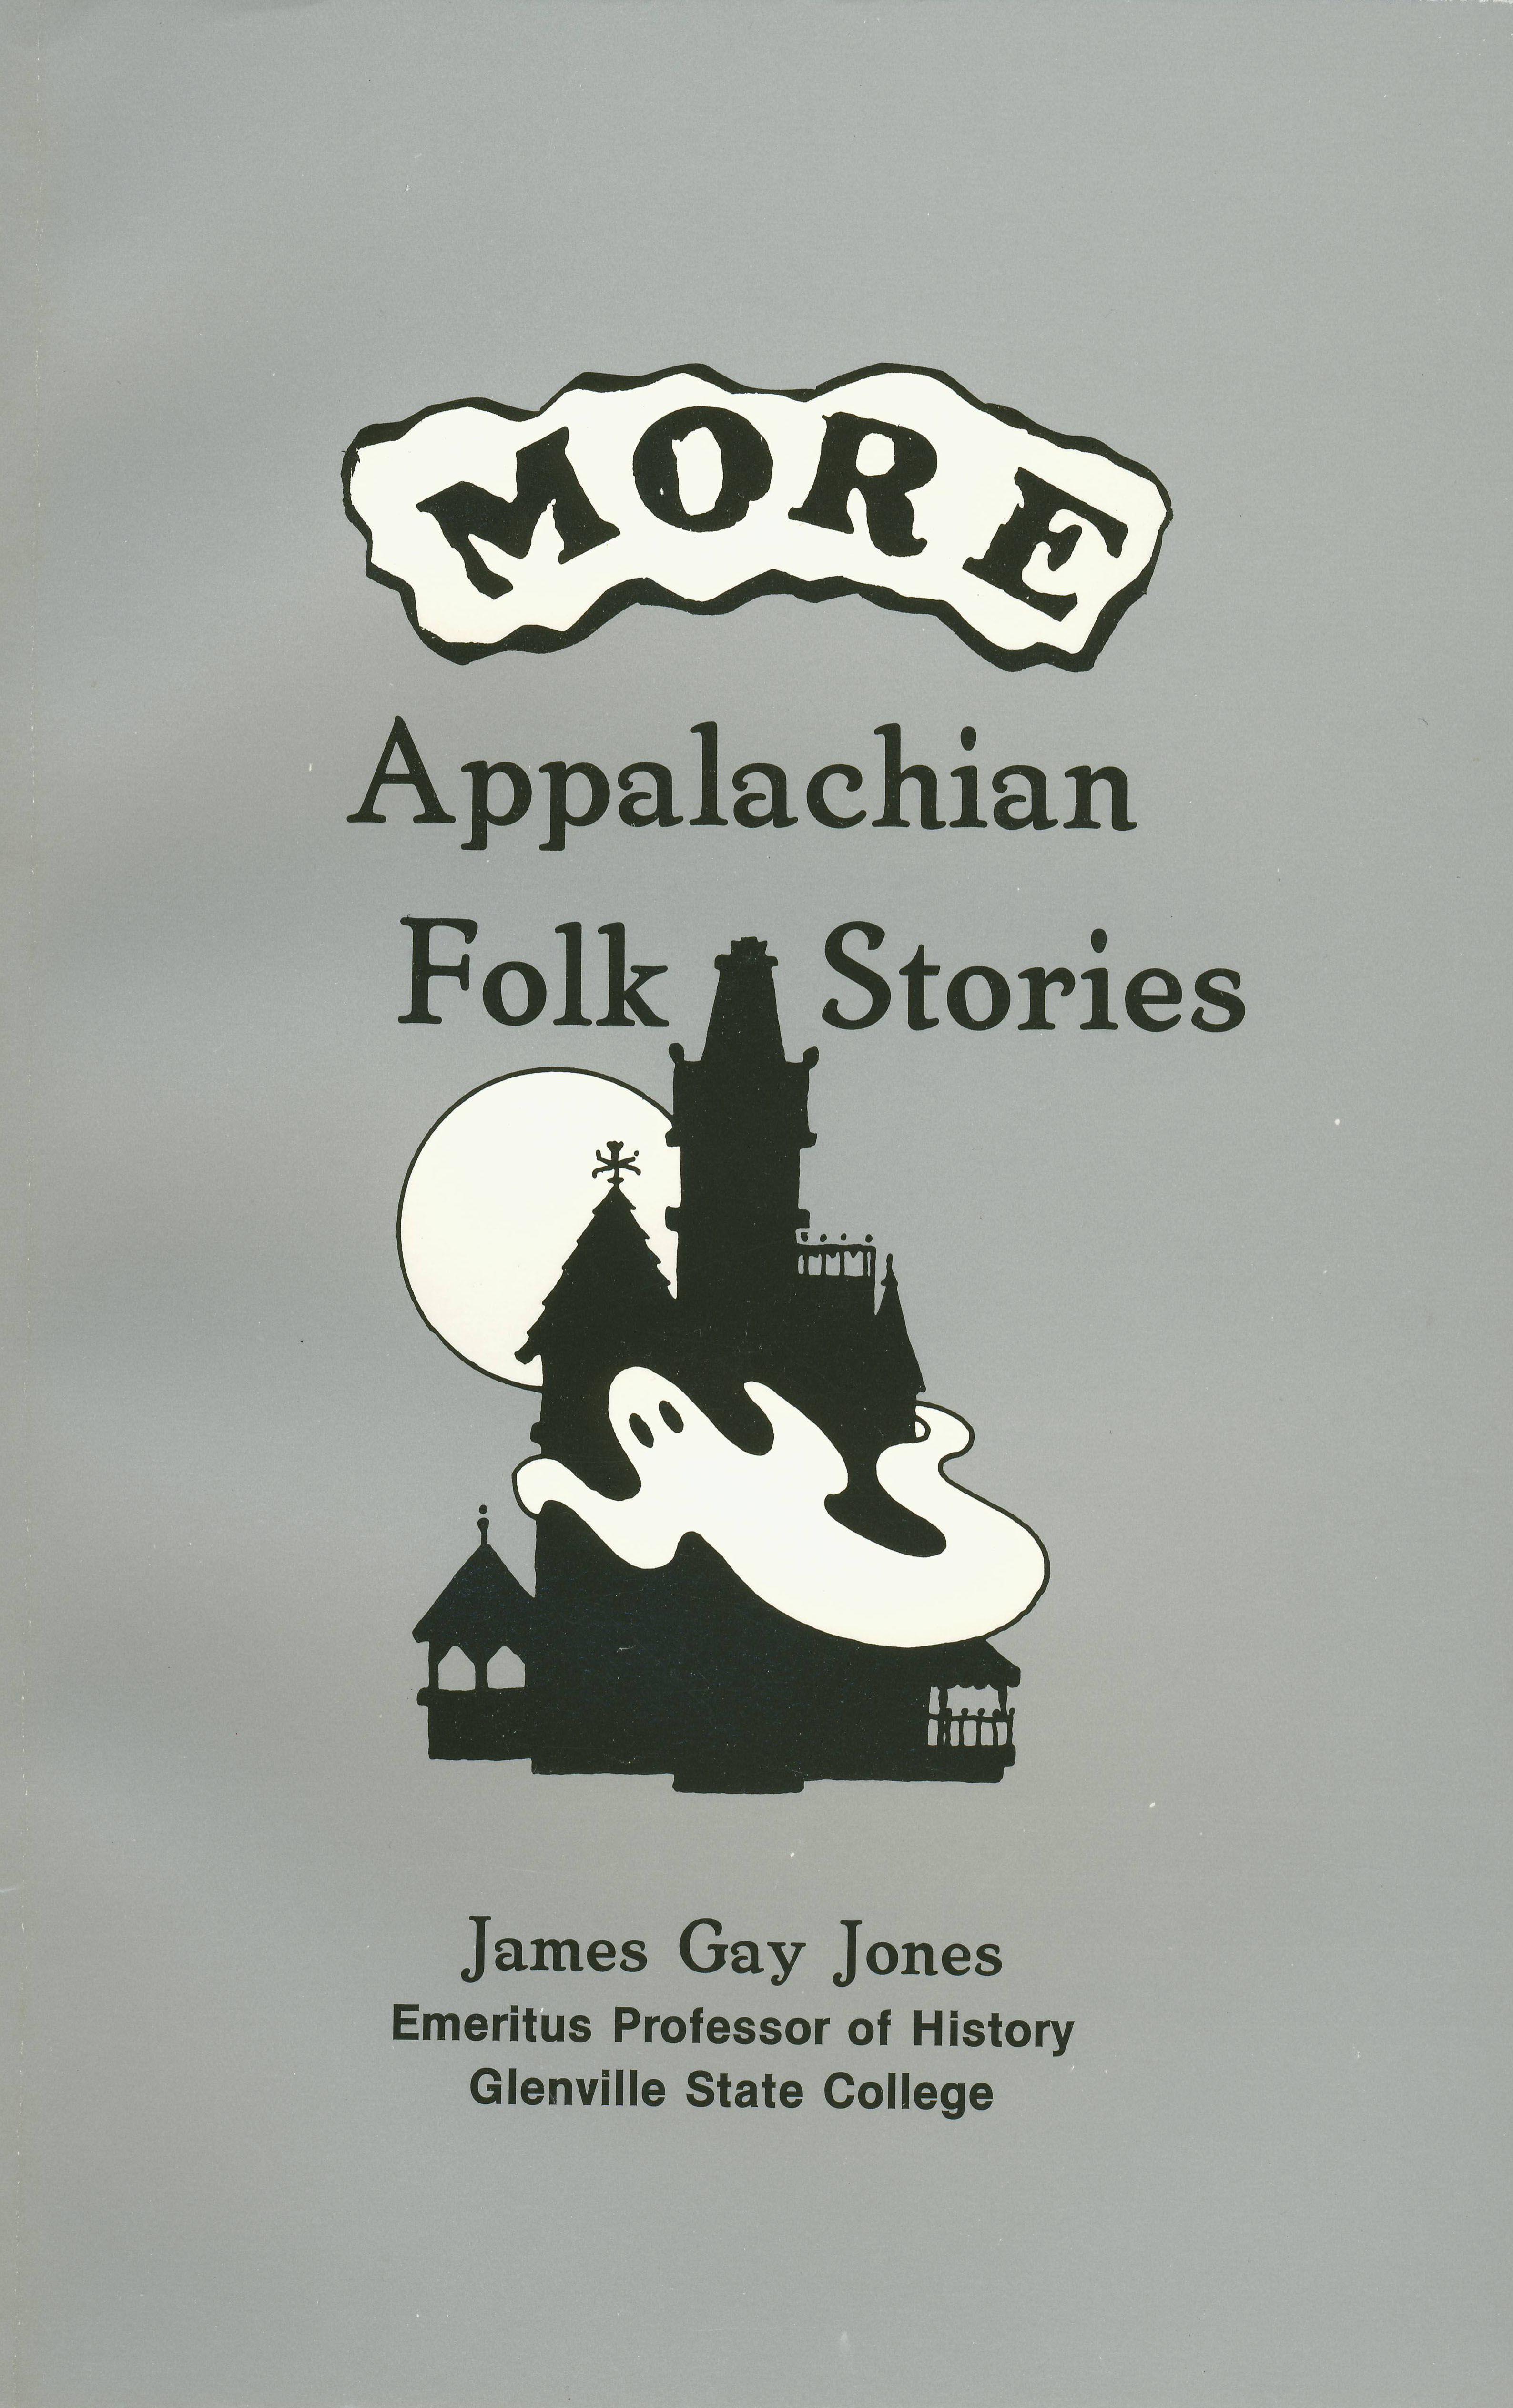 More Appalachian Folk Stories